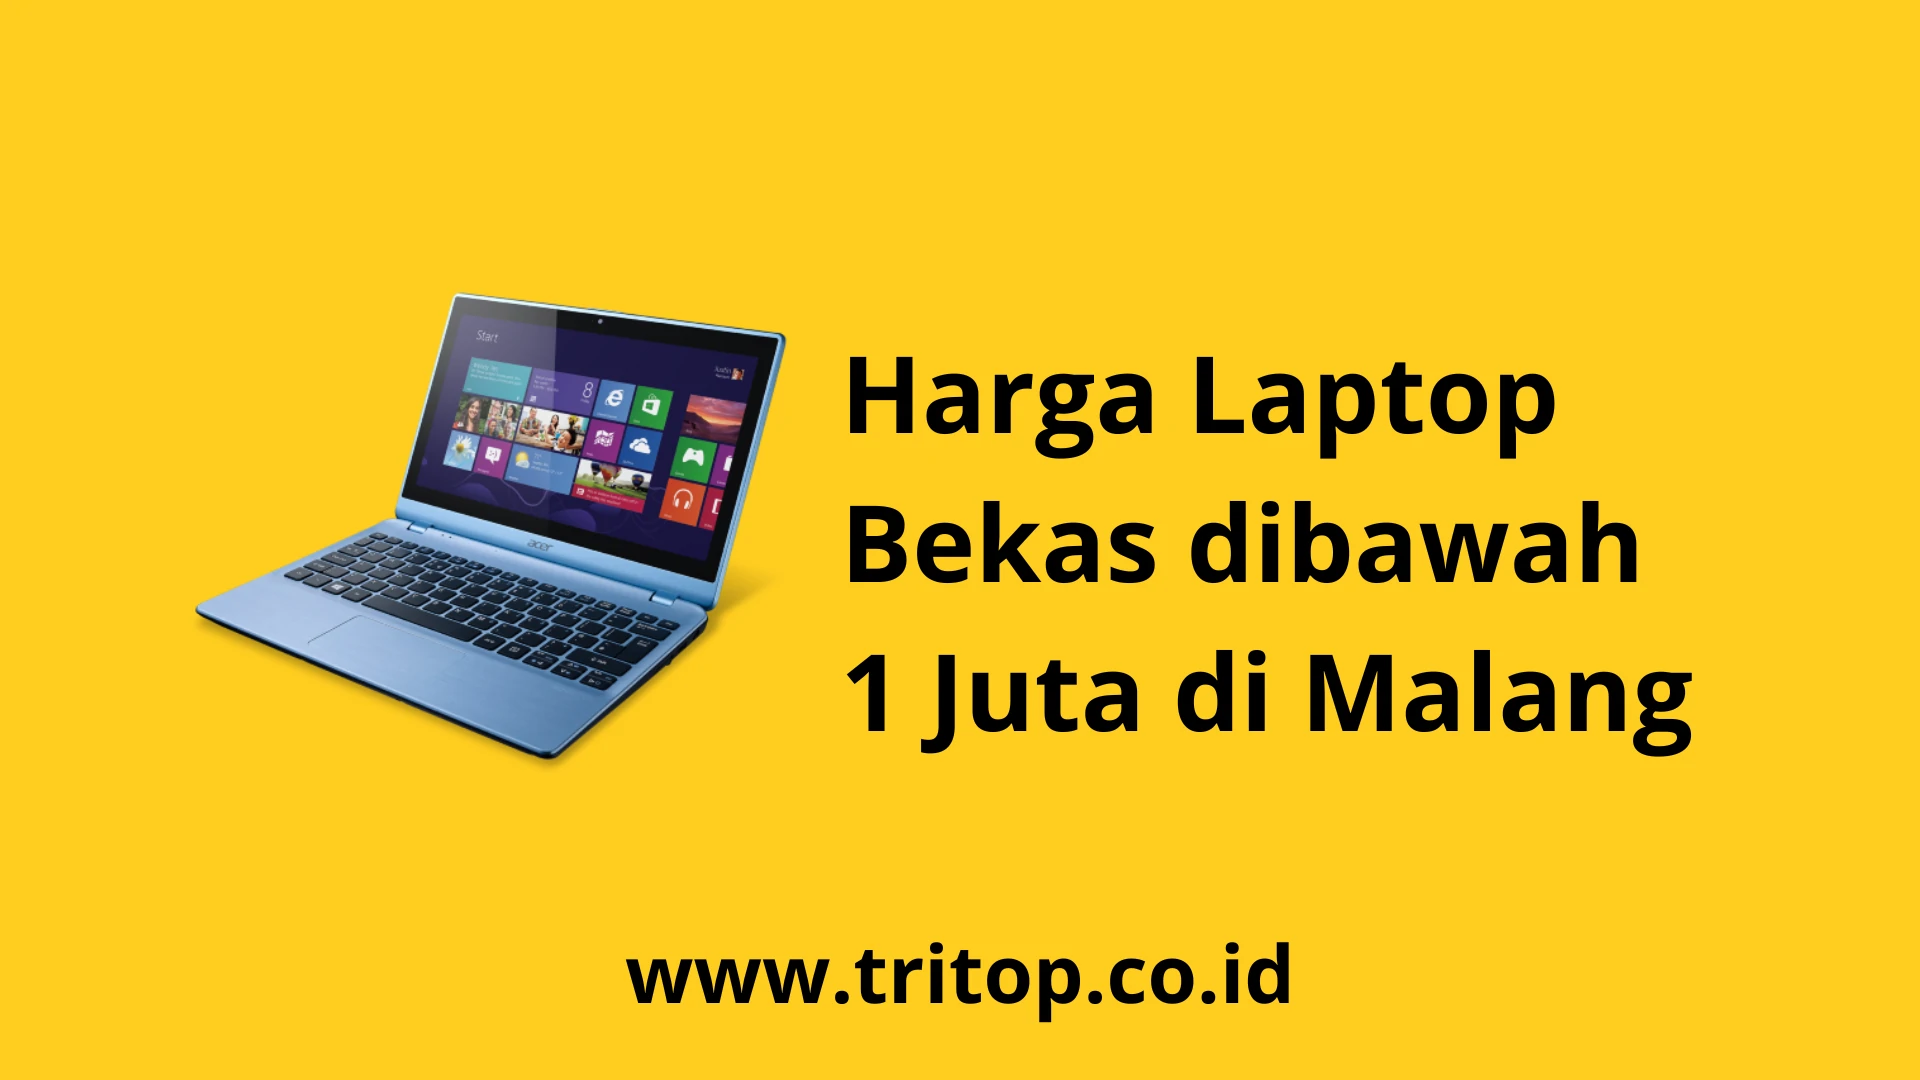 Harga Laptop Bekas dibawah 1 Juta Malang Tritop.co.id